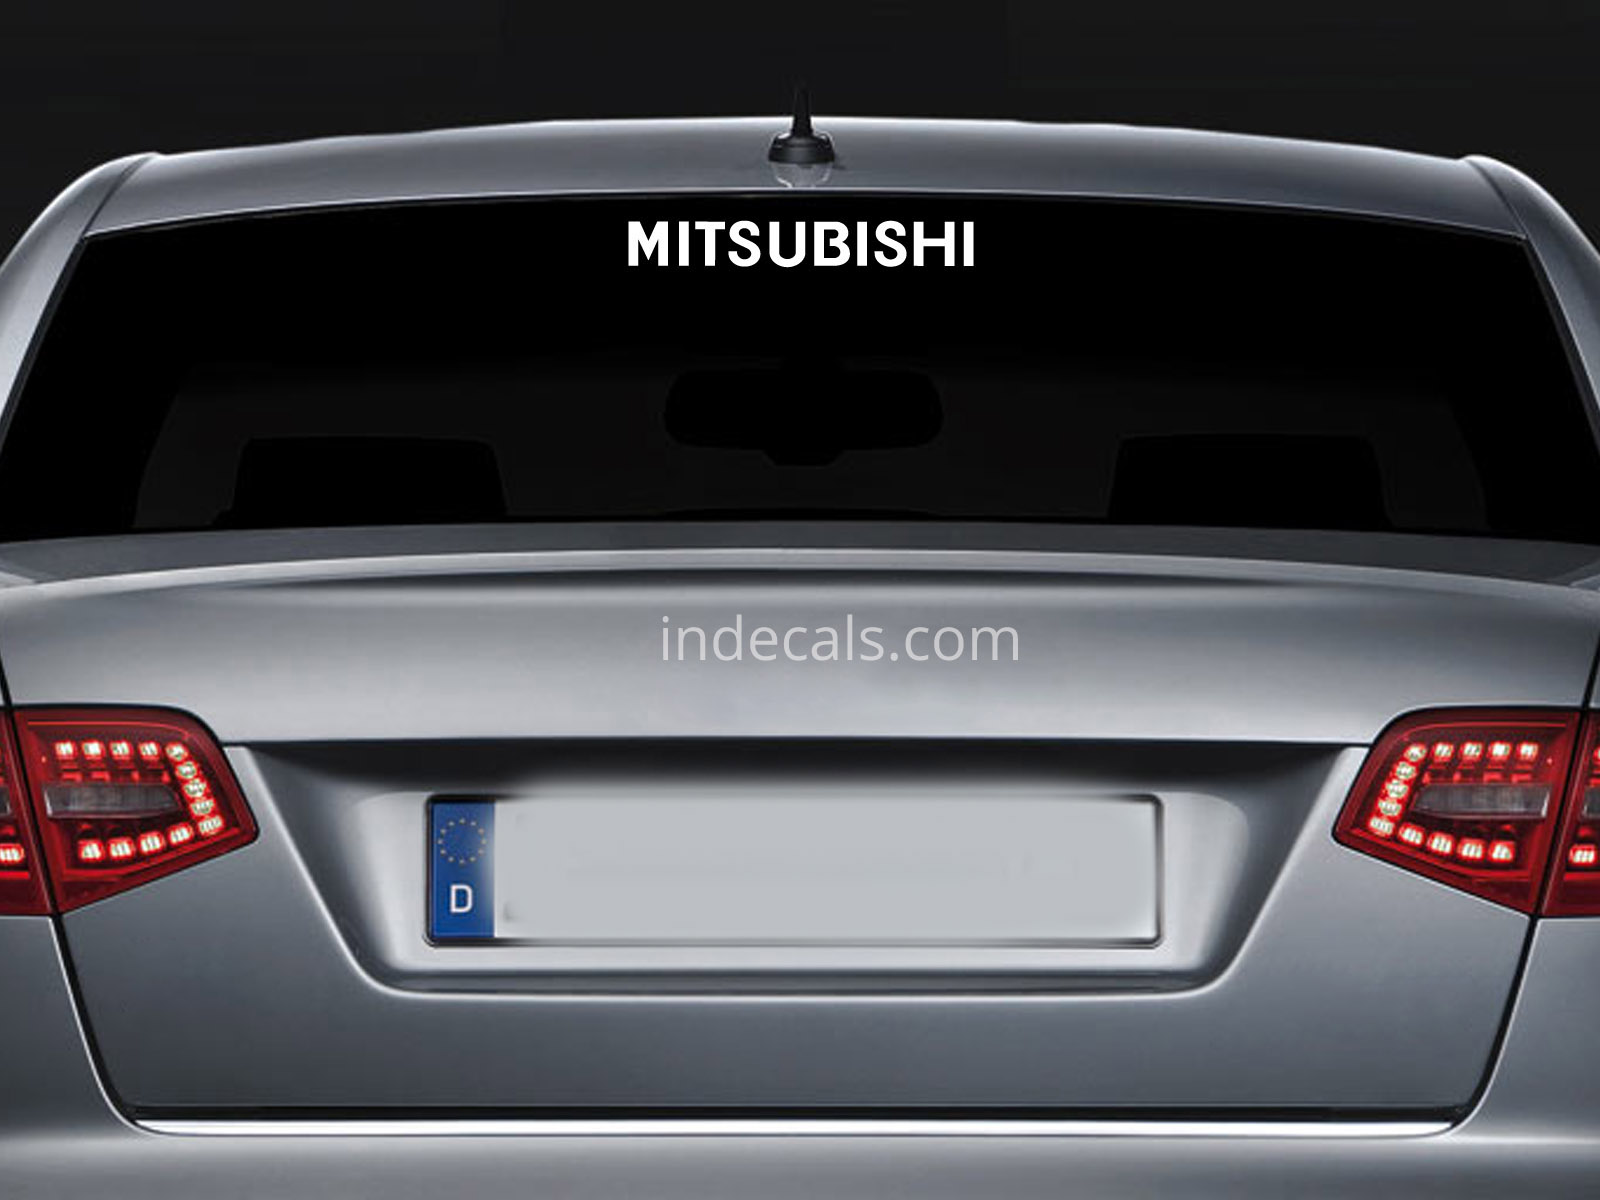 1 x Mitsubishi Sticker for Windshield or Back Window - White